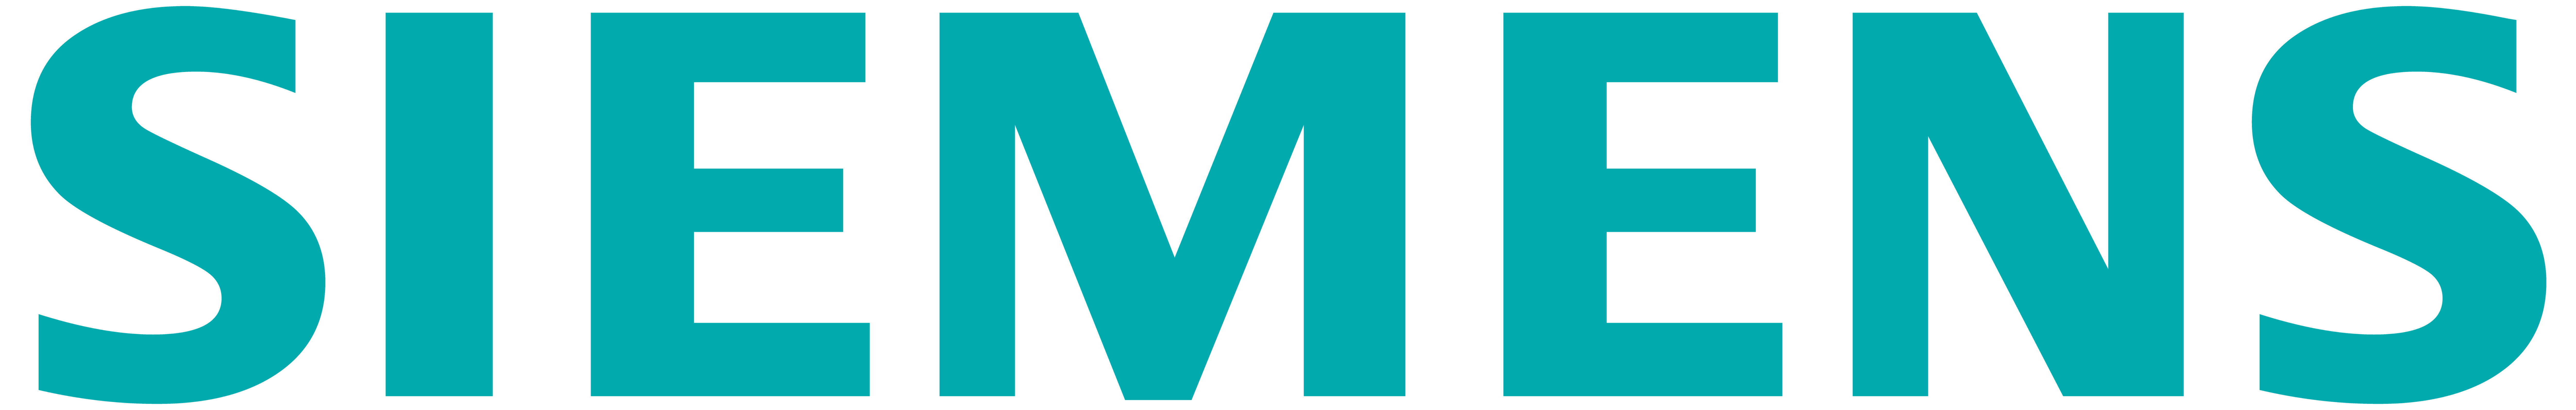 Logotipo da Siemens